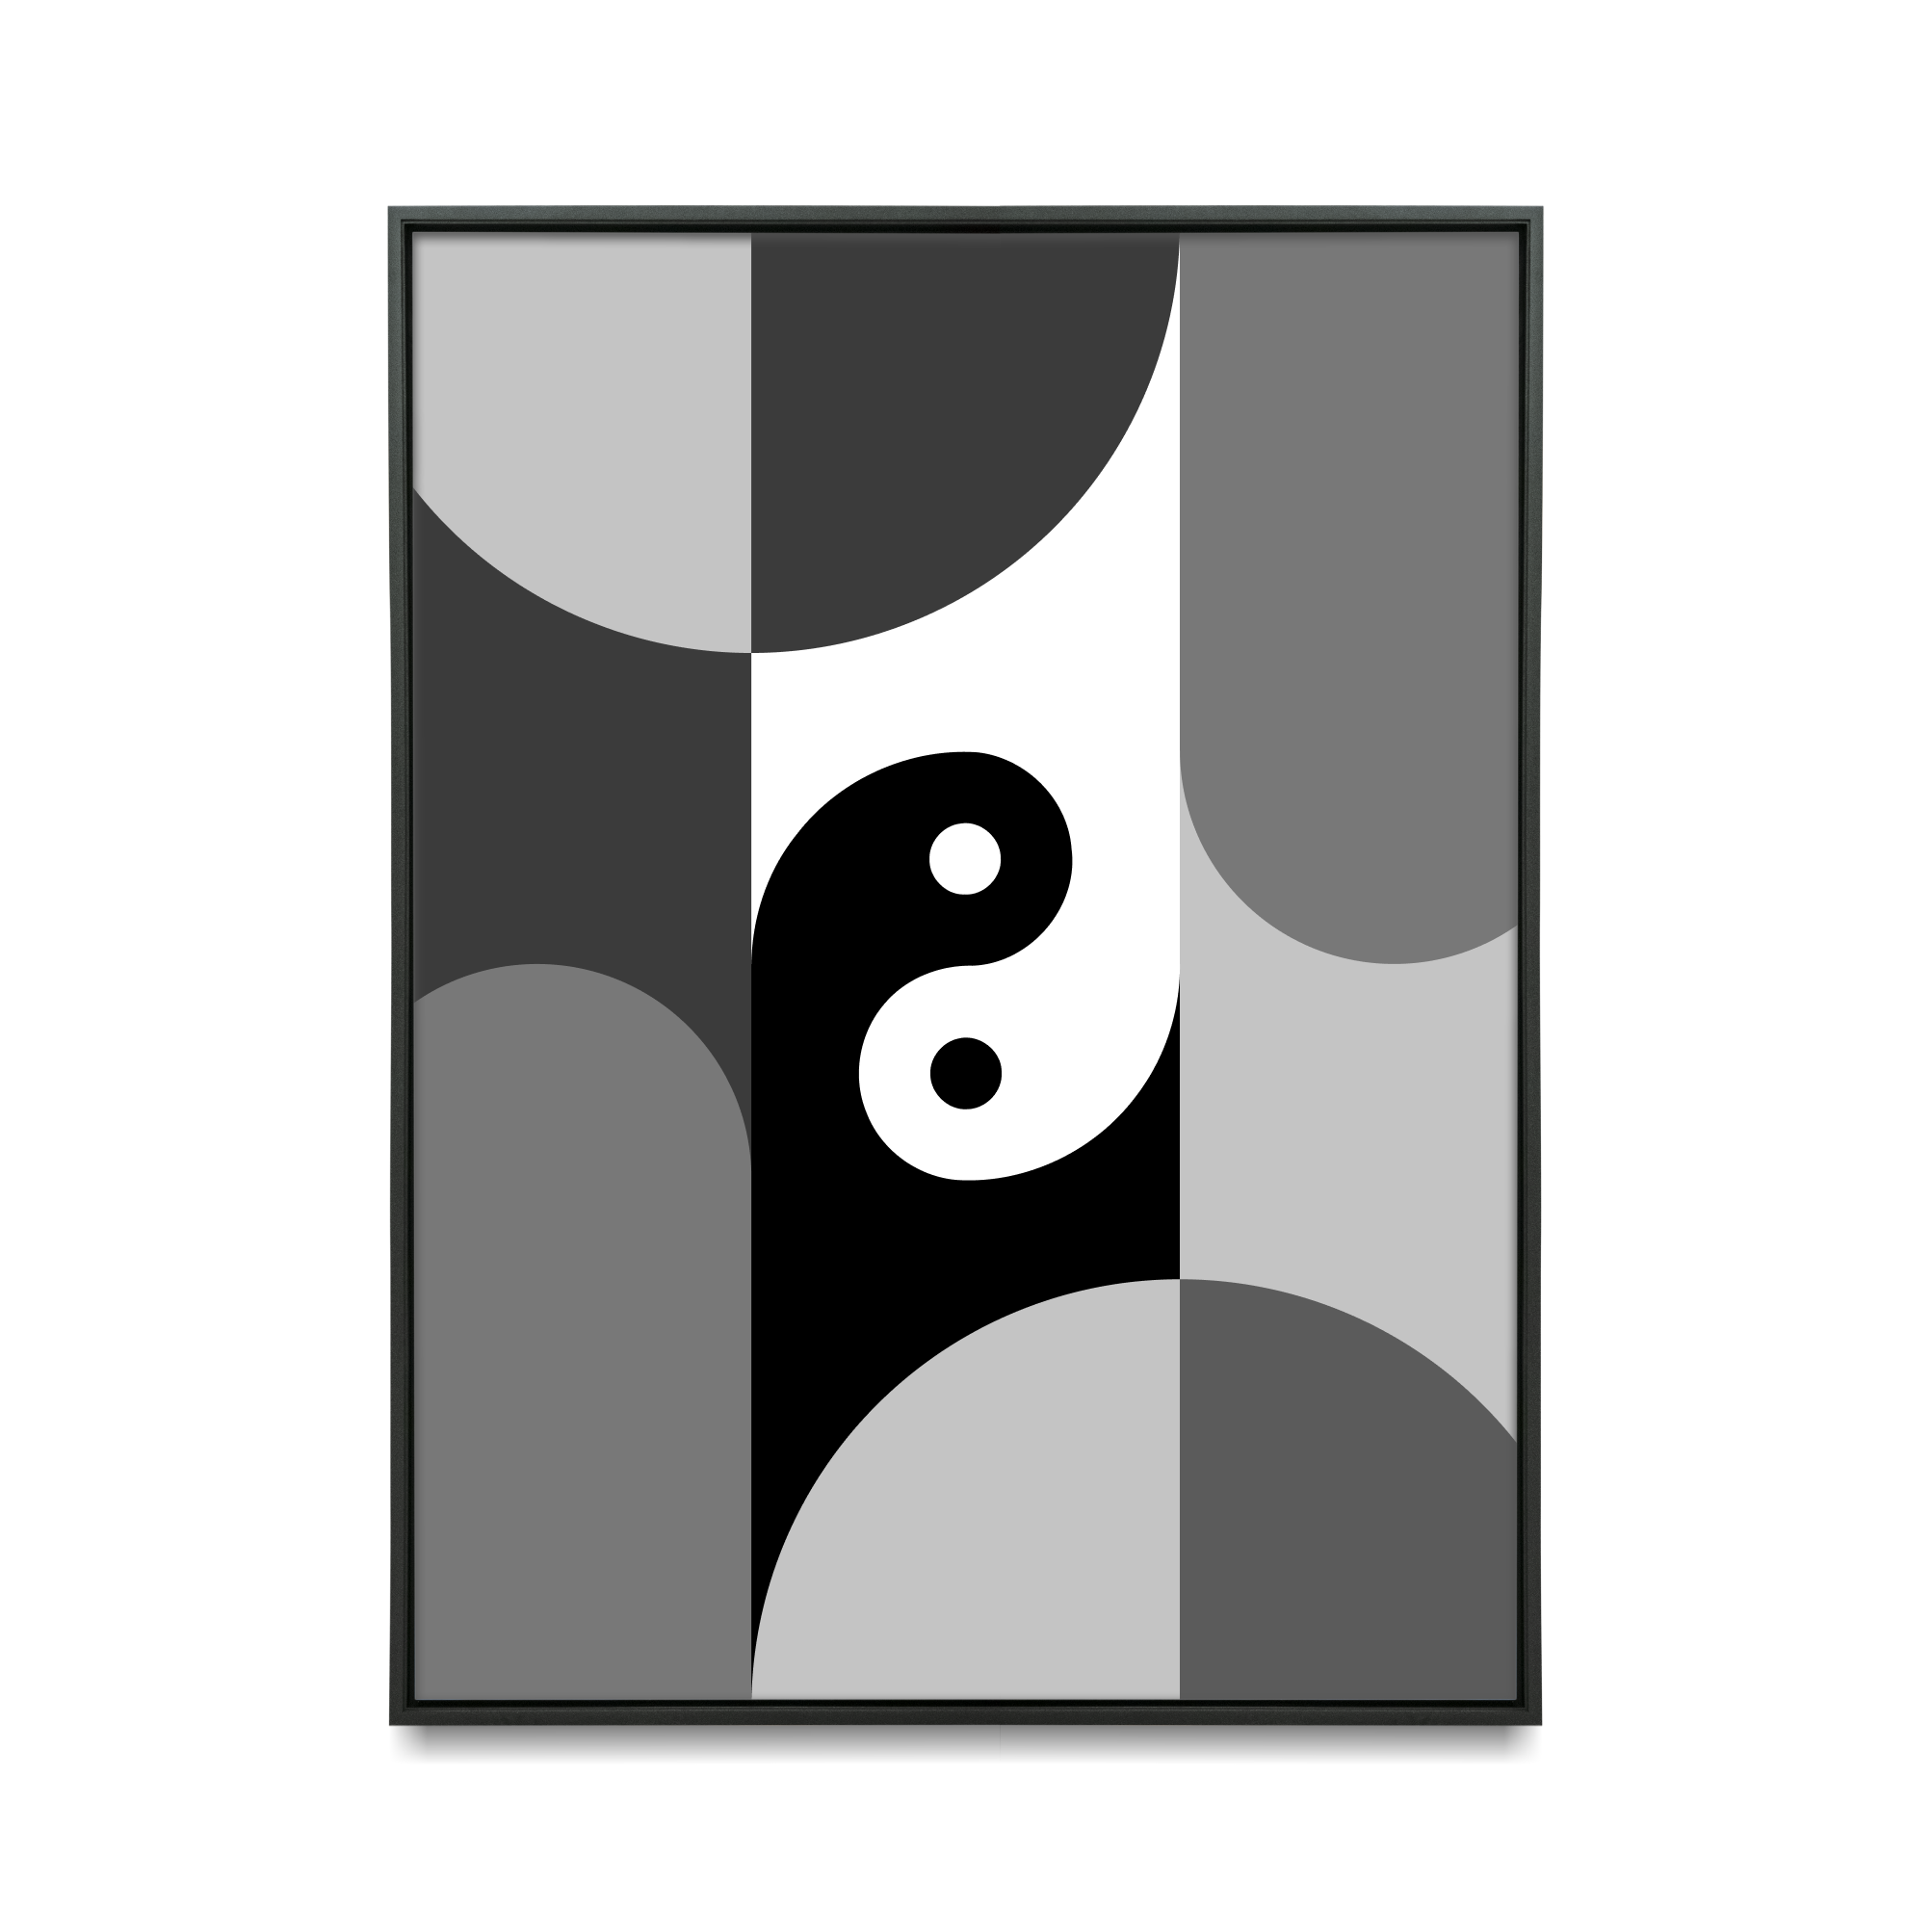 Yin Yang Bauhaus Poster | UNFRAMED